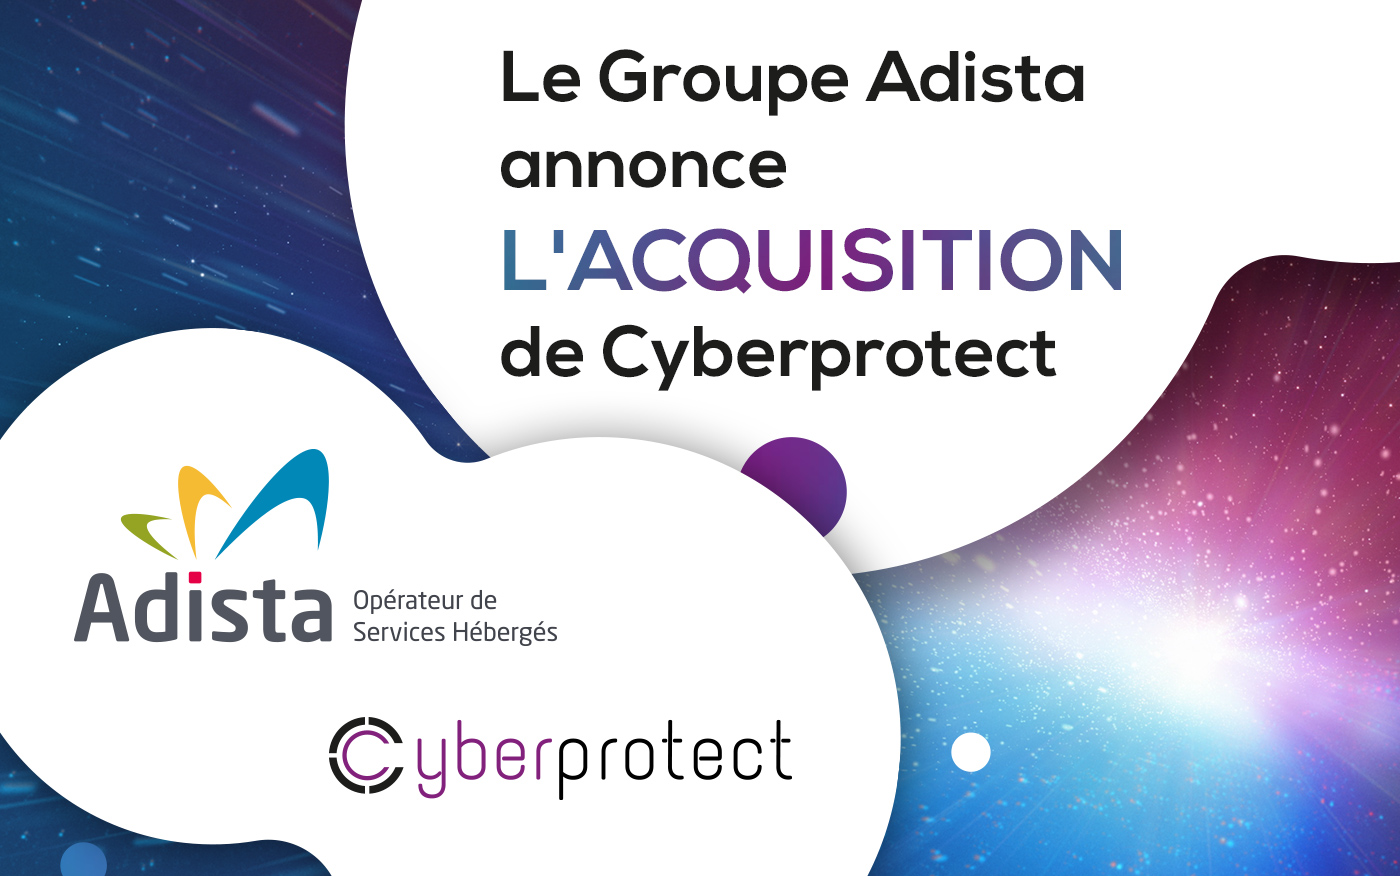 Le Groupe Adista acquiert Cyberprotect